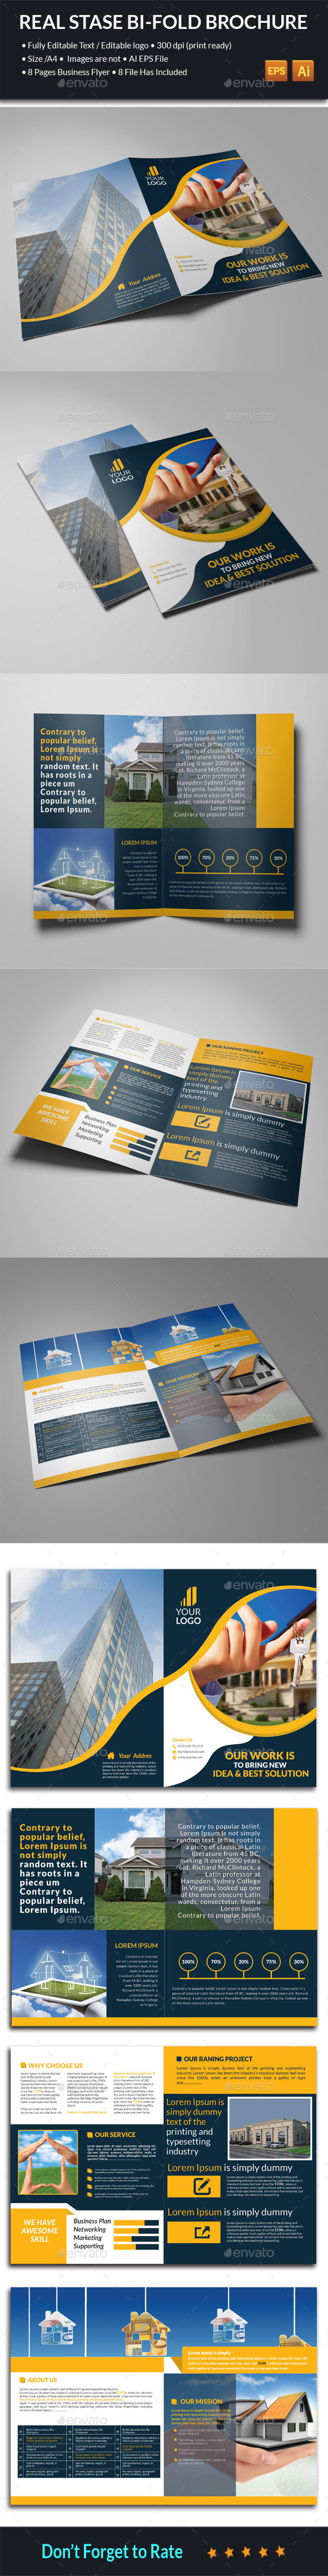 Real State Bi-Fold Brochure